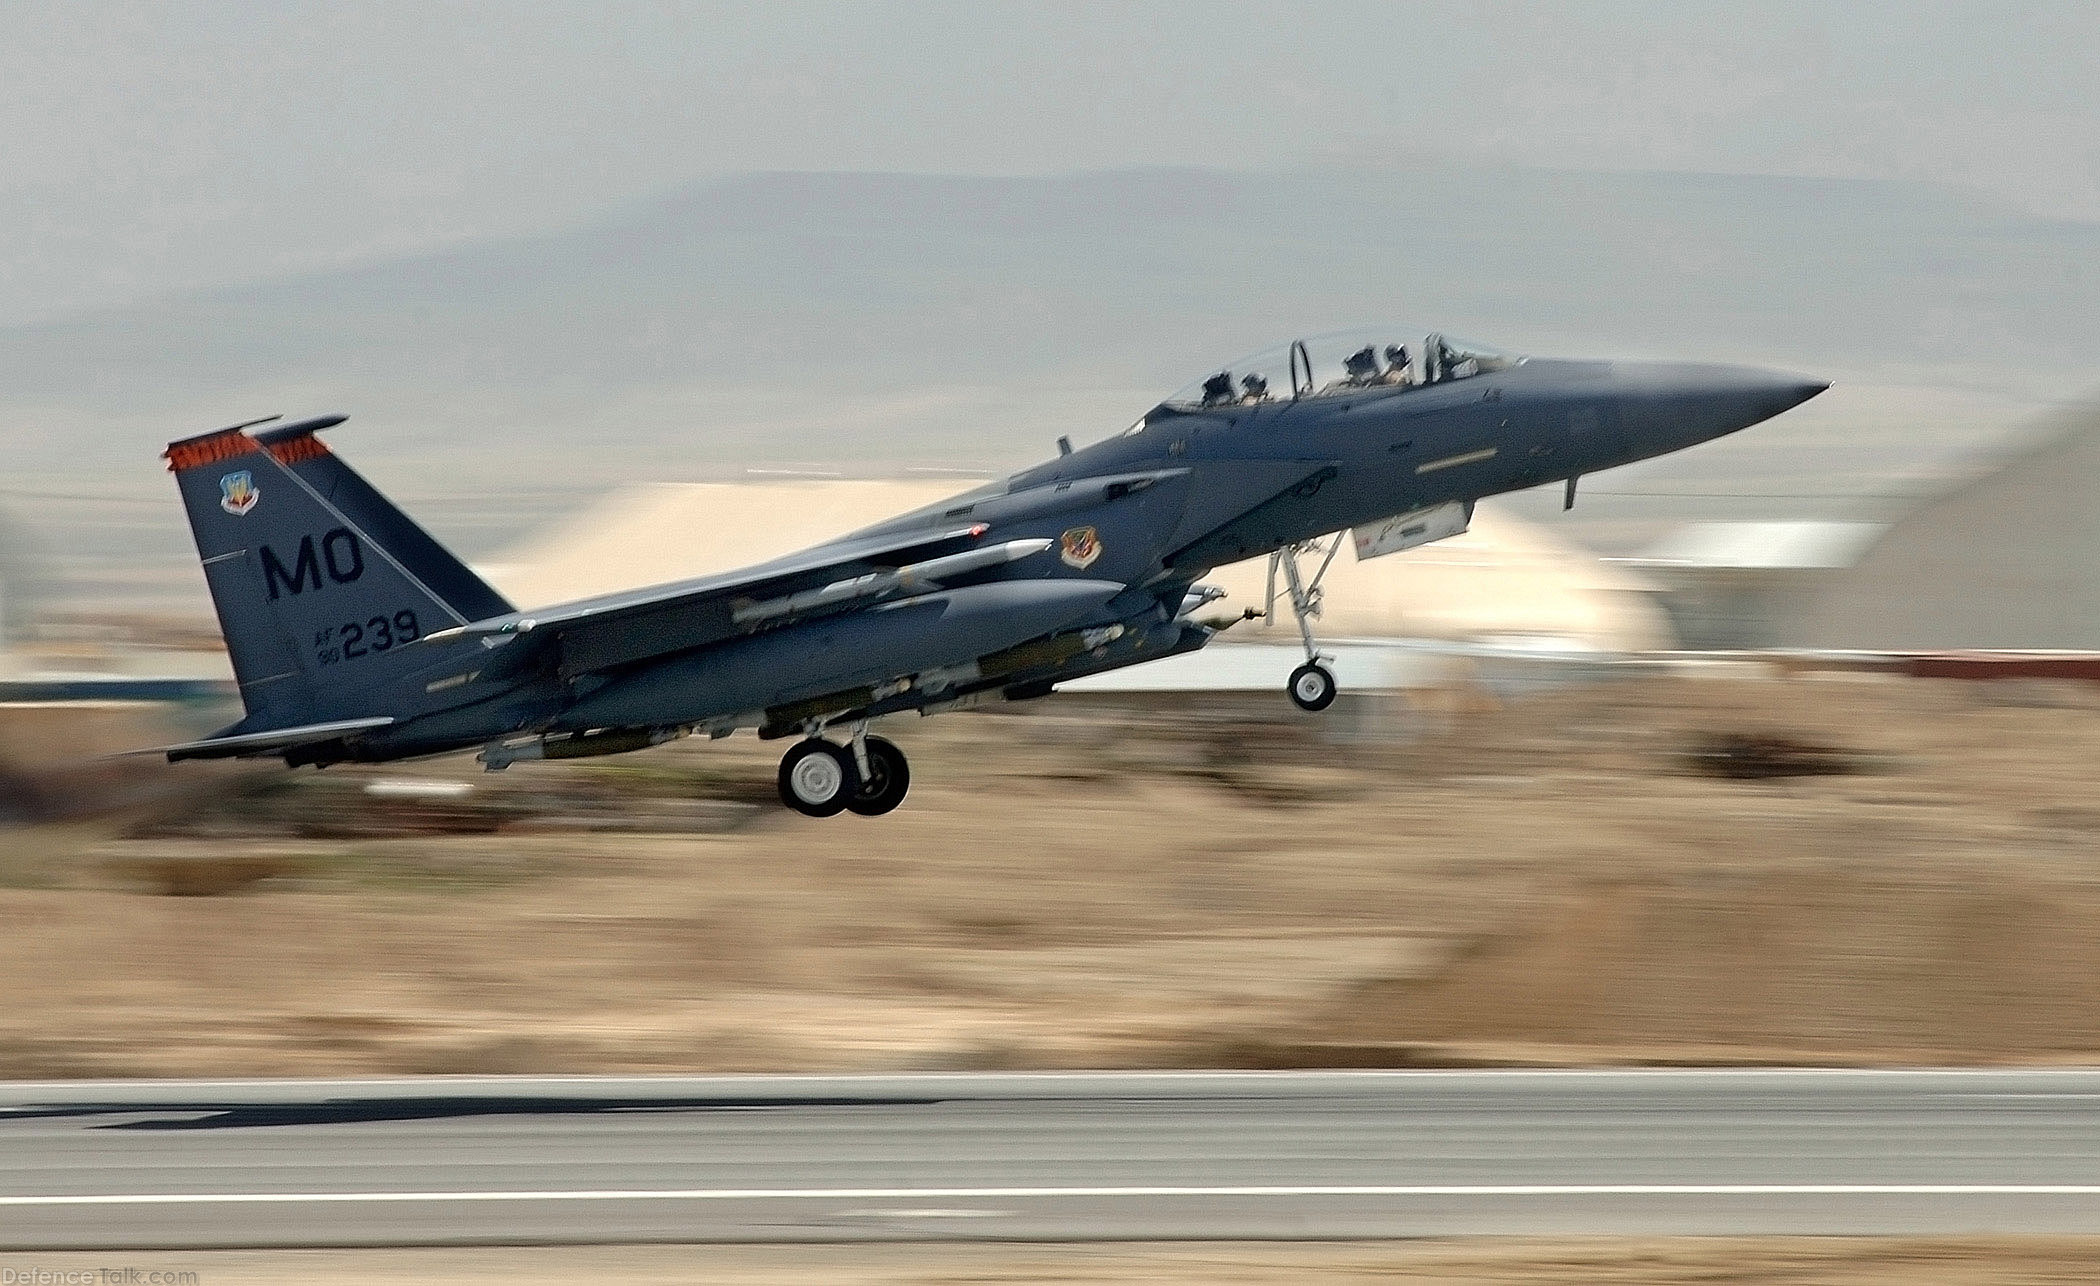 F-15E Strike Eagle jet takes off